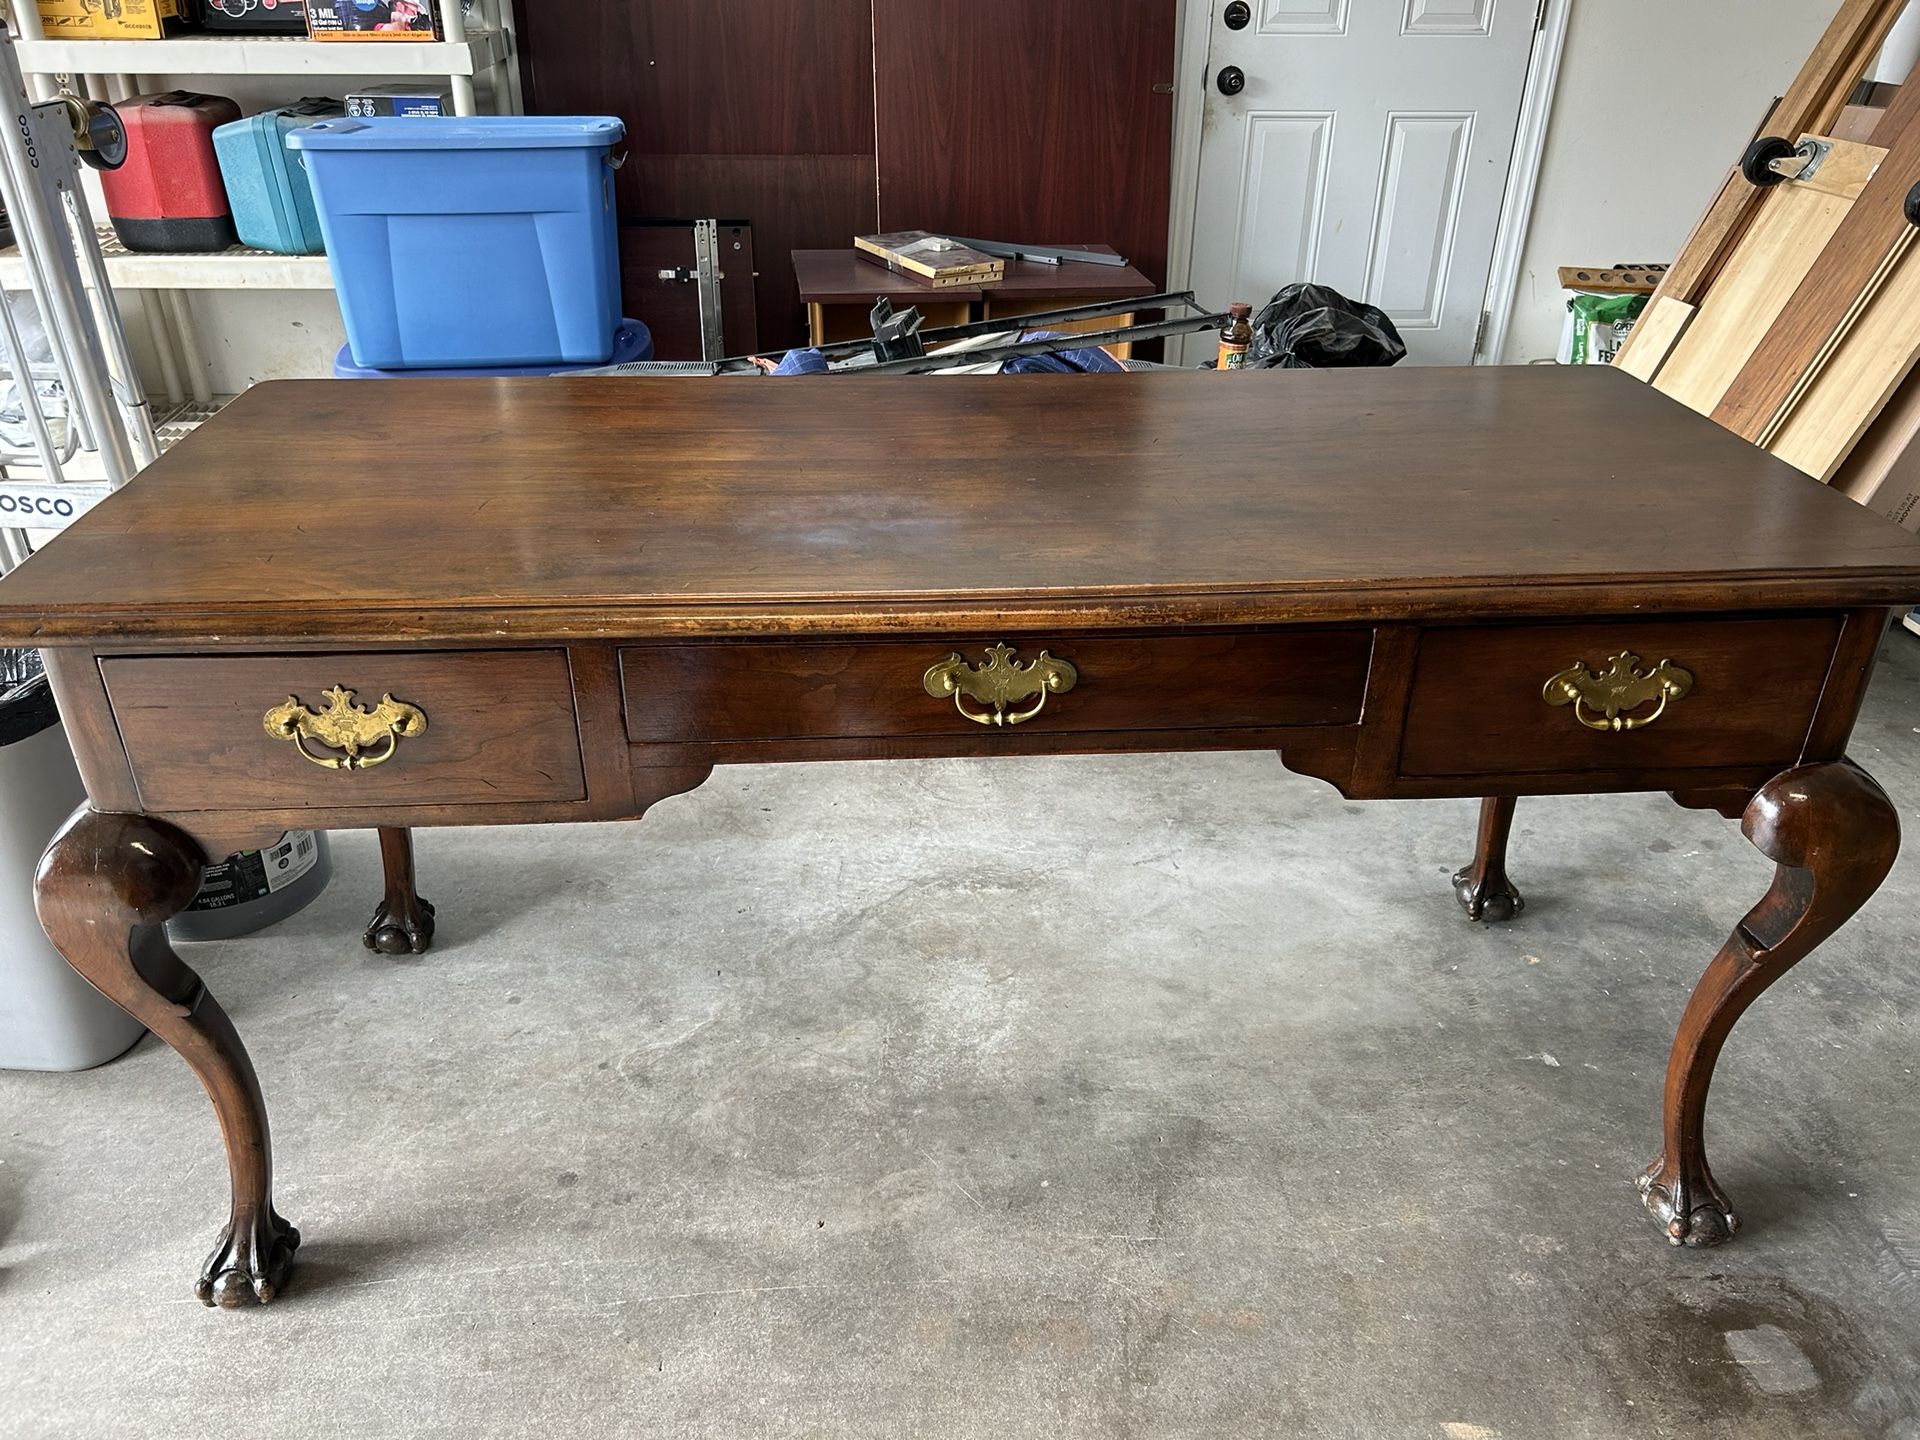 Antique Eagle Claw desk